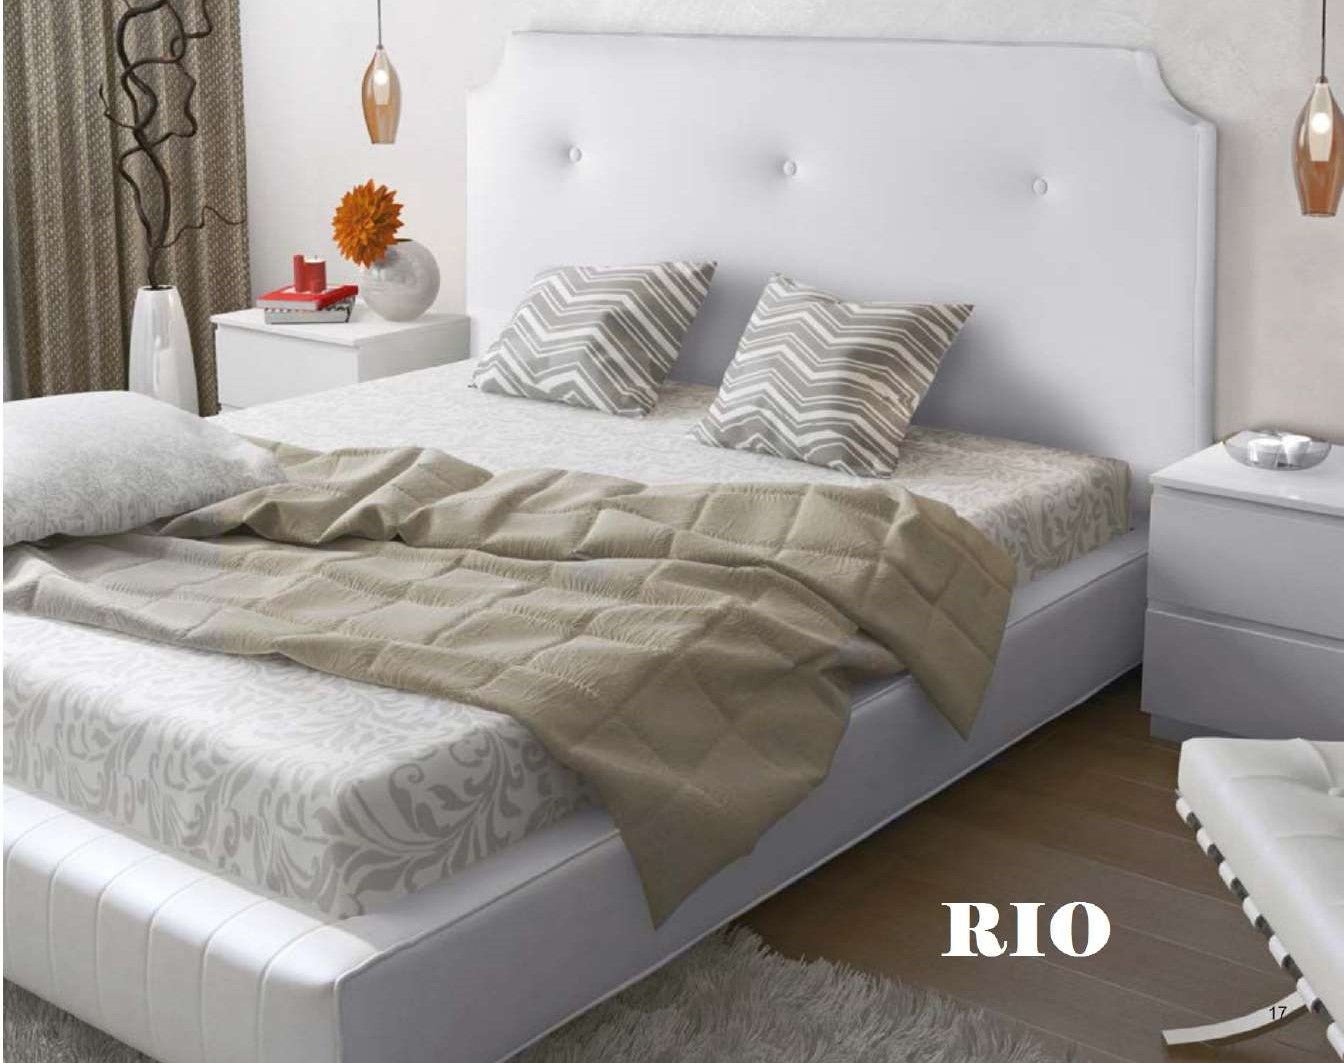 Upholstered headboard - RIO